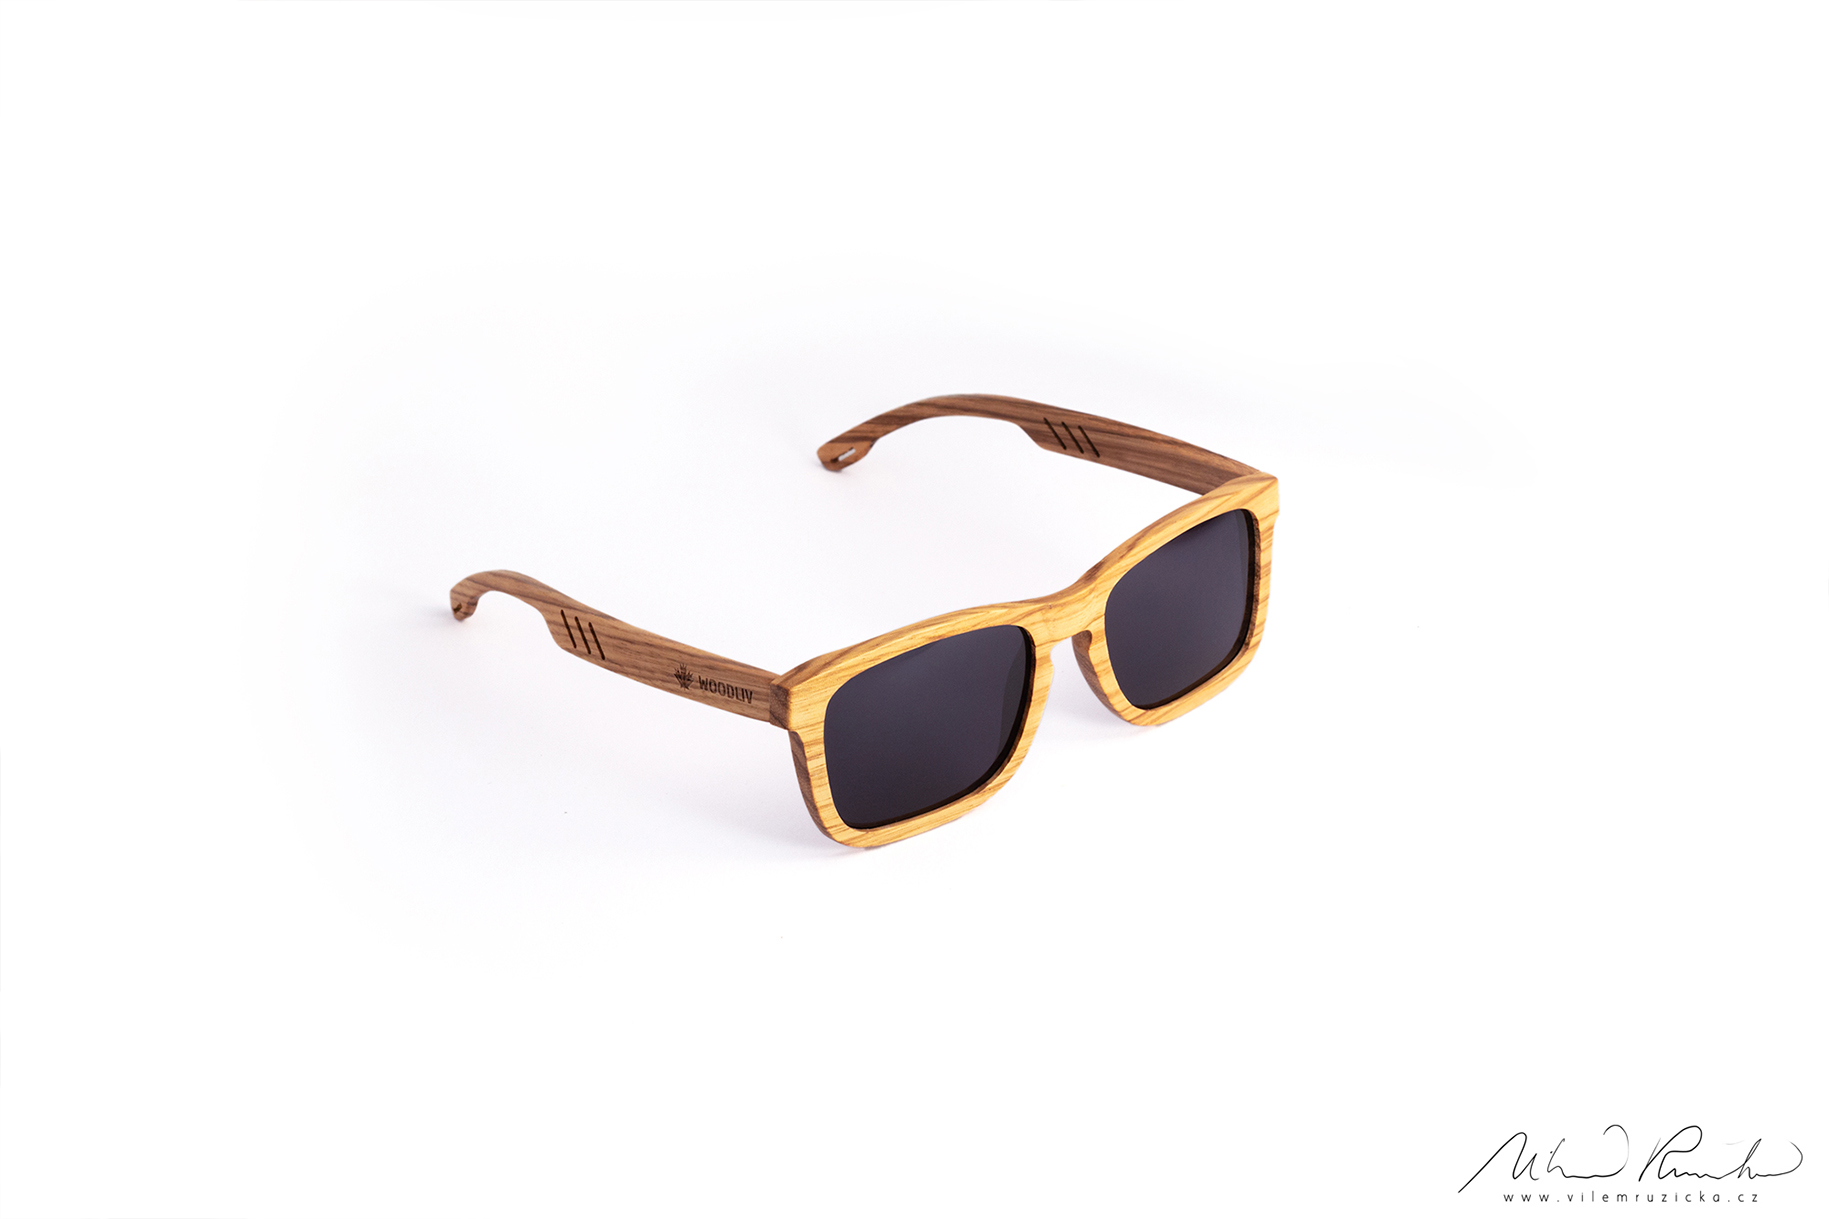 WOODLIV Sunglasses Product Photo